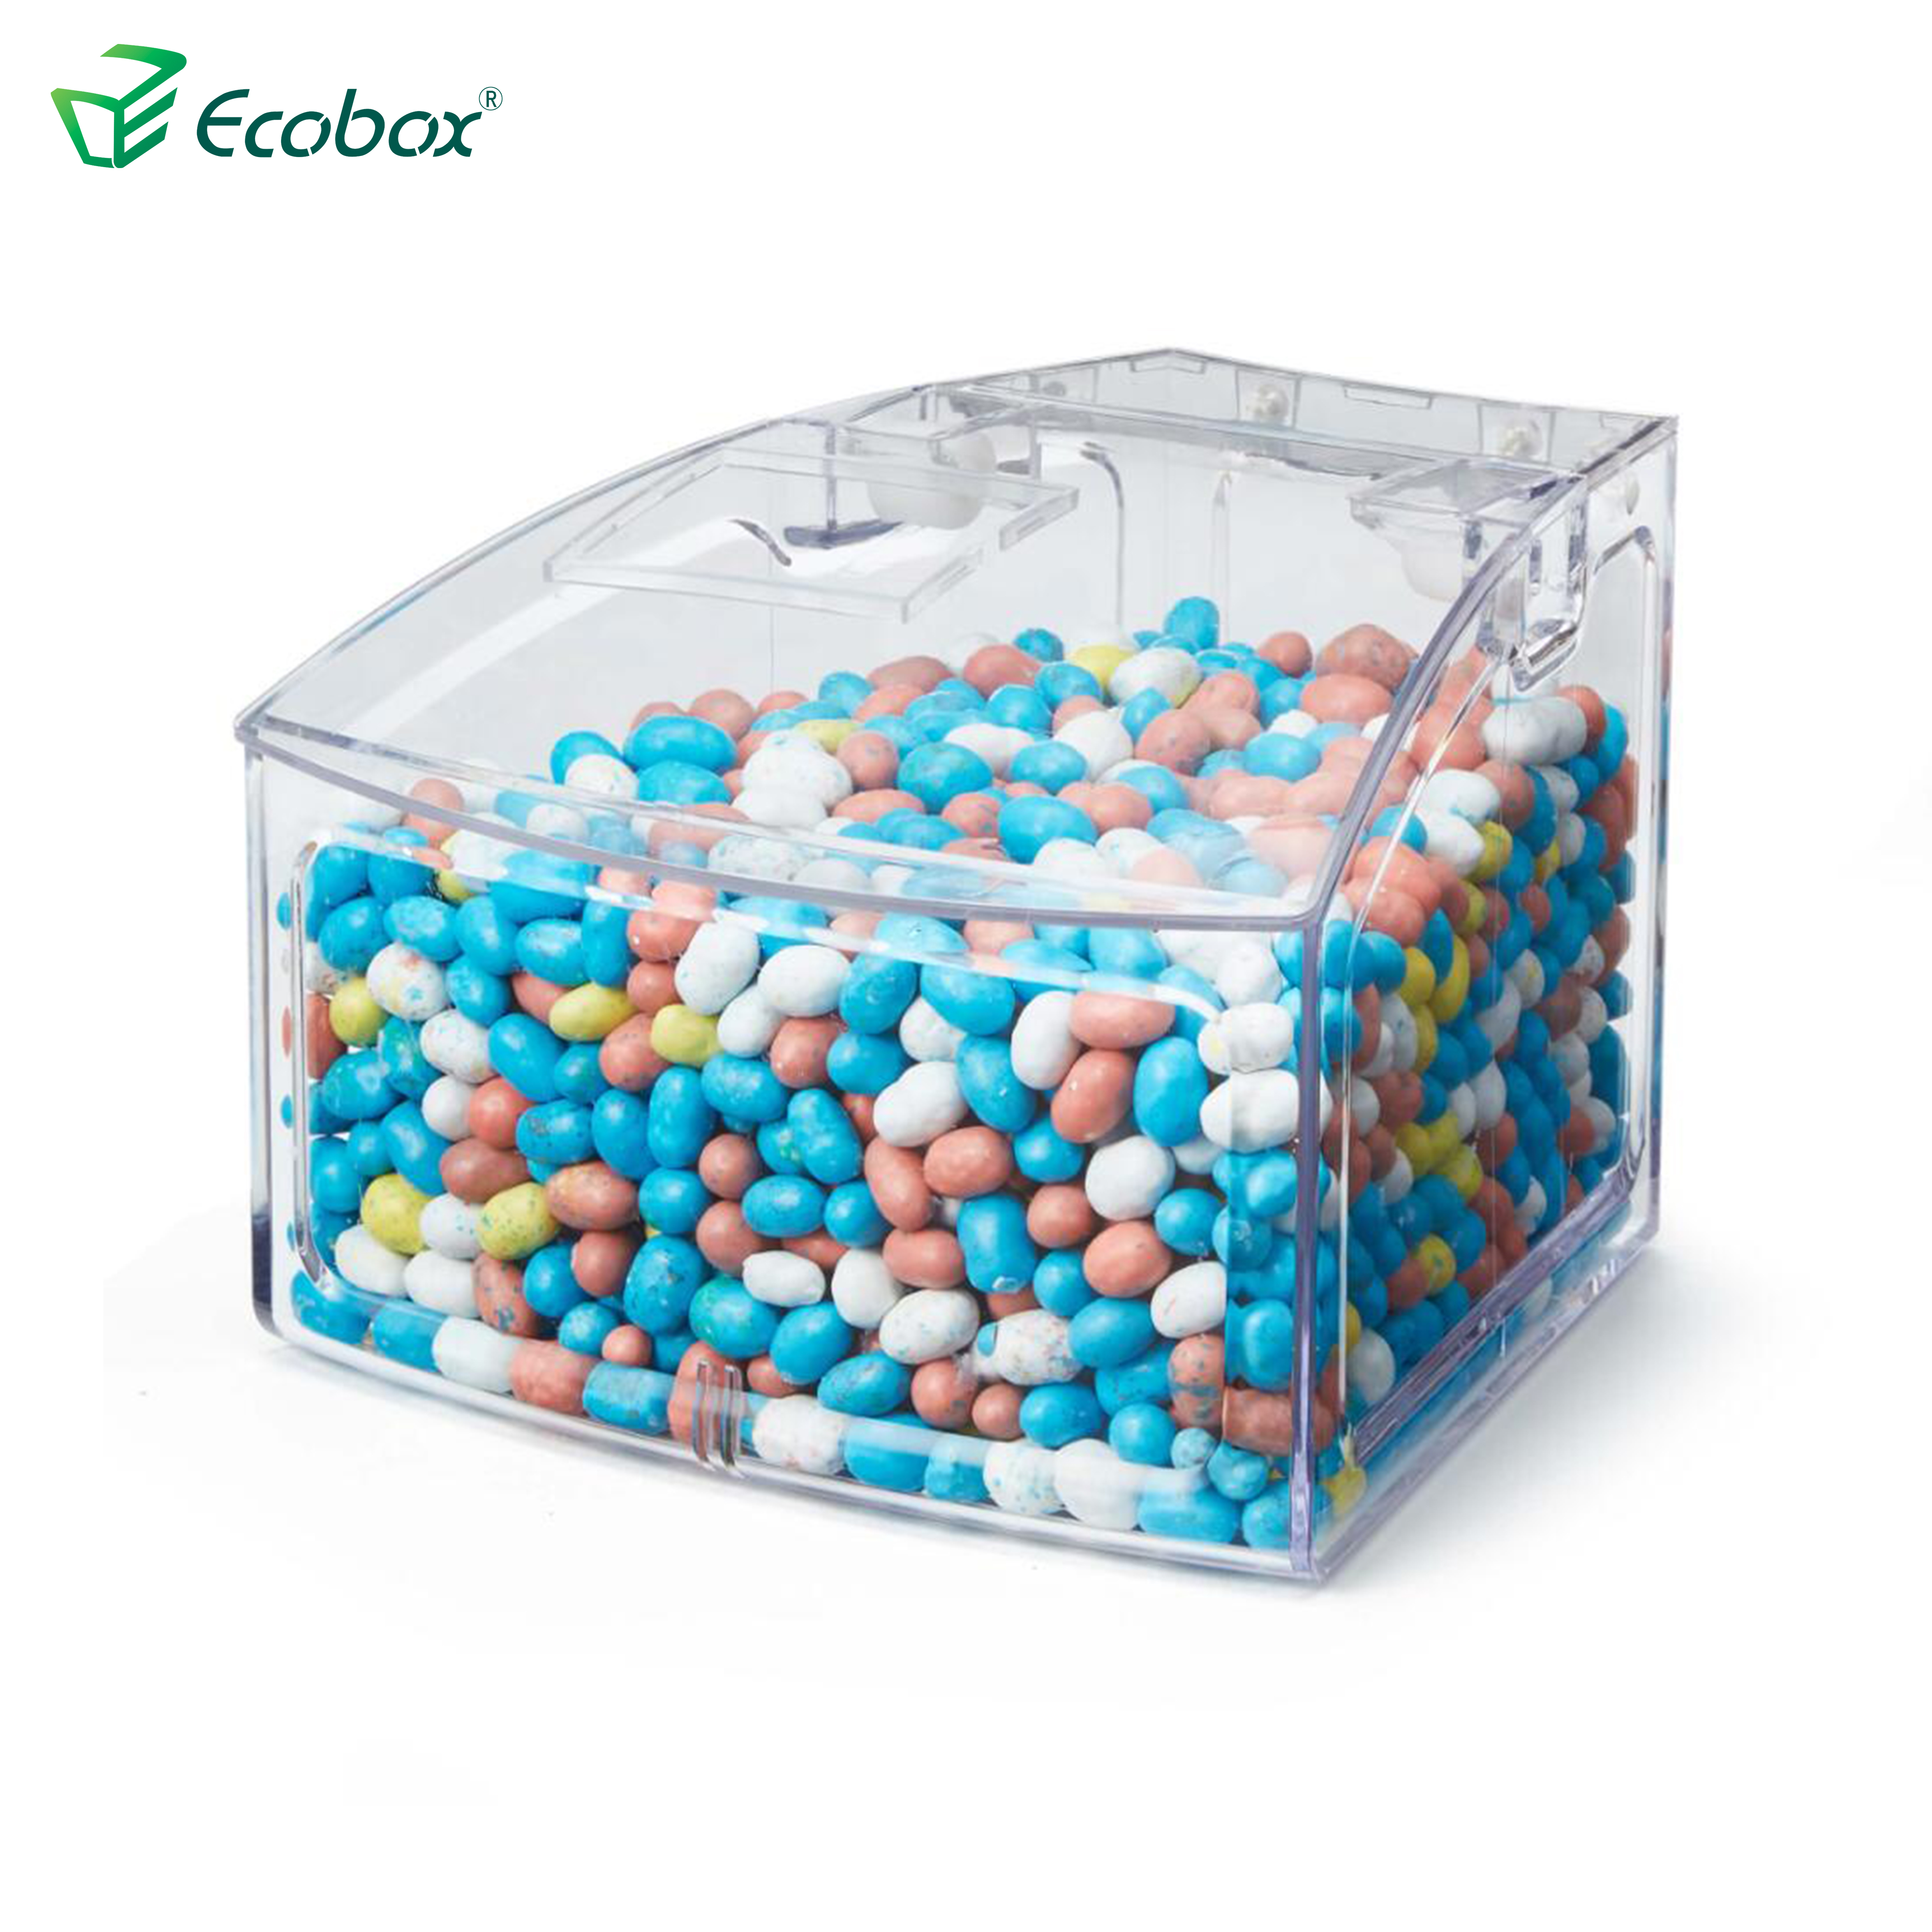 Ecobox SPH-010 Arc shape small bulk food bin for supermarket shelf